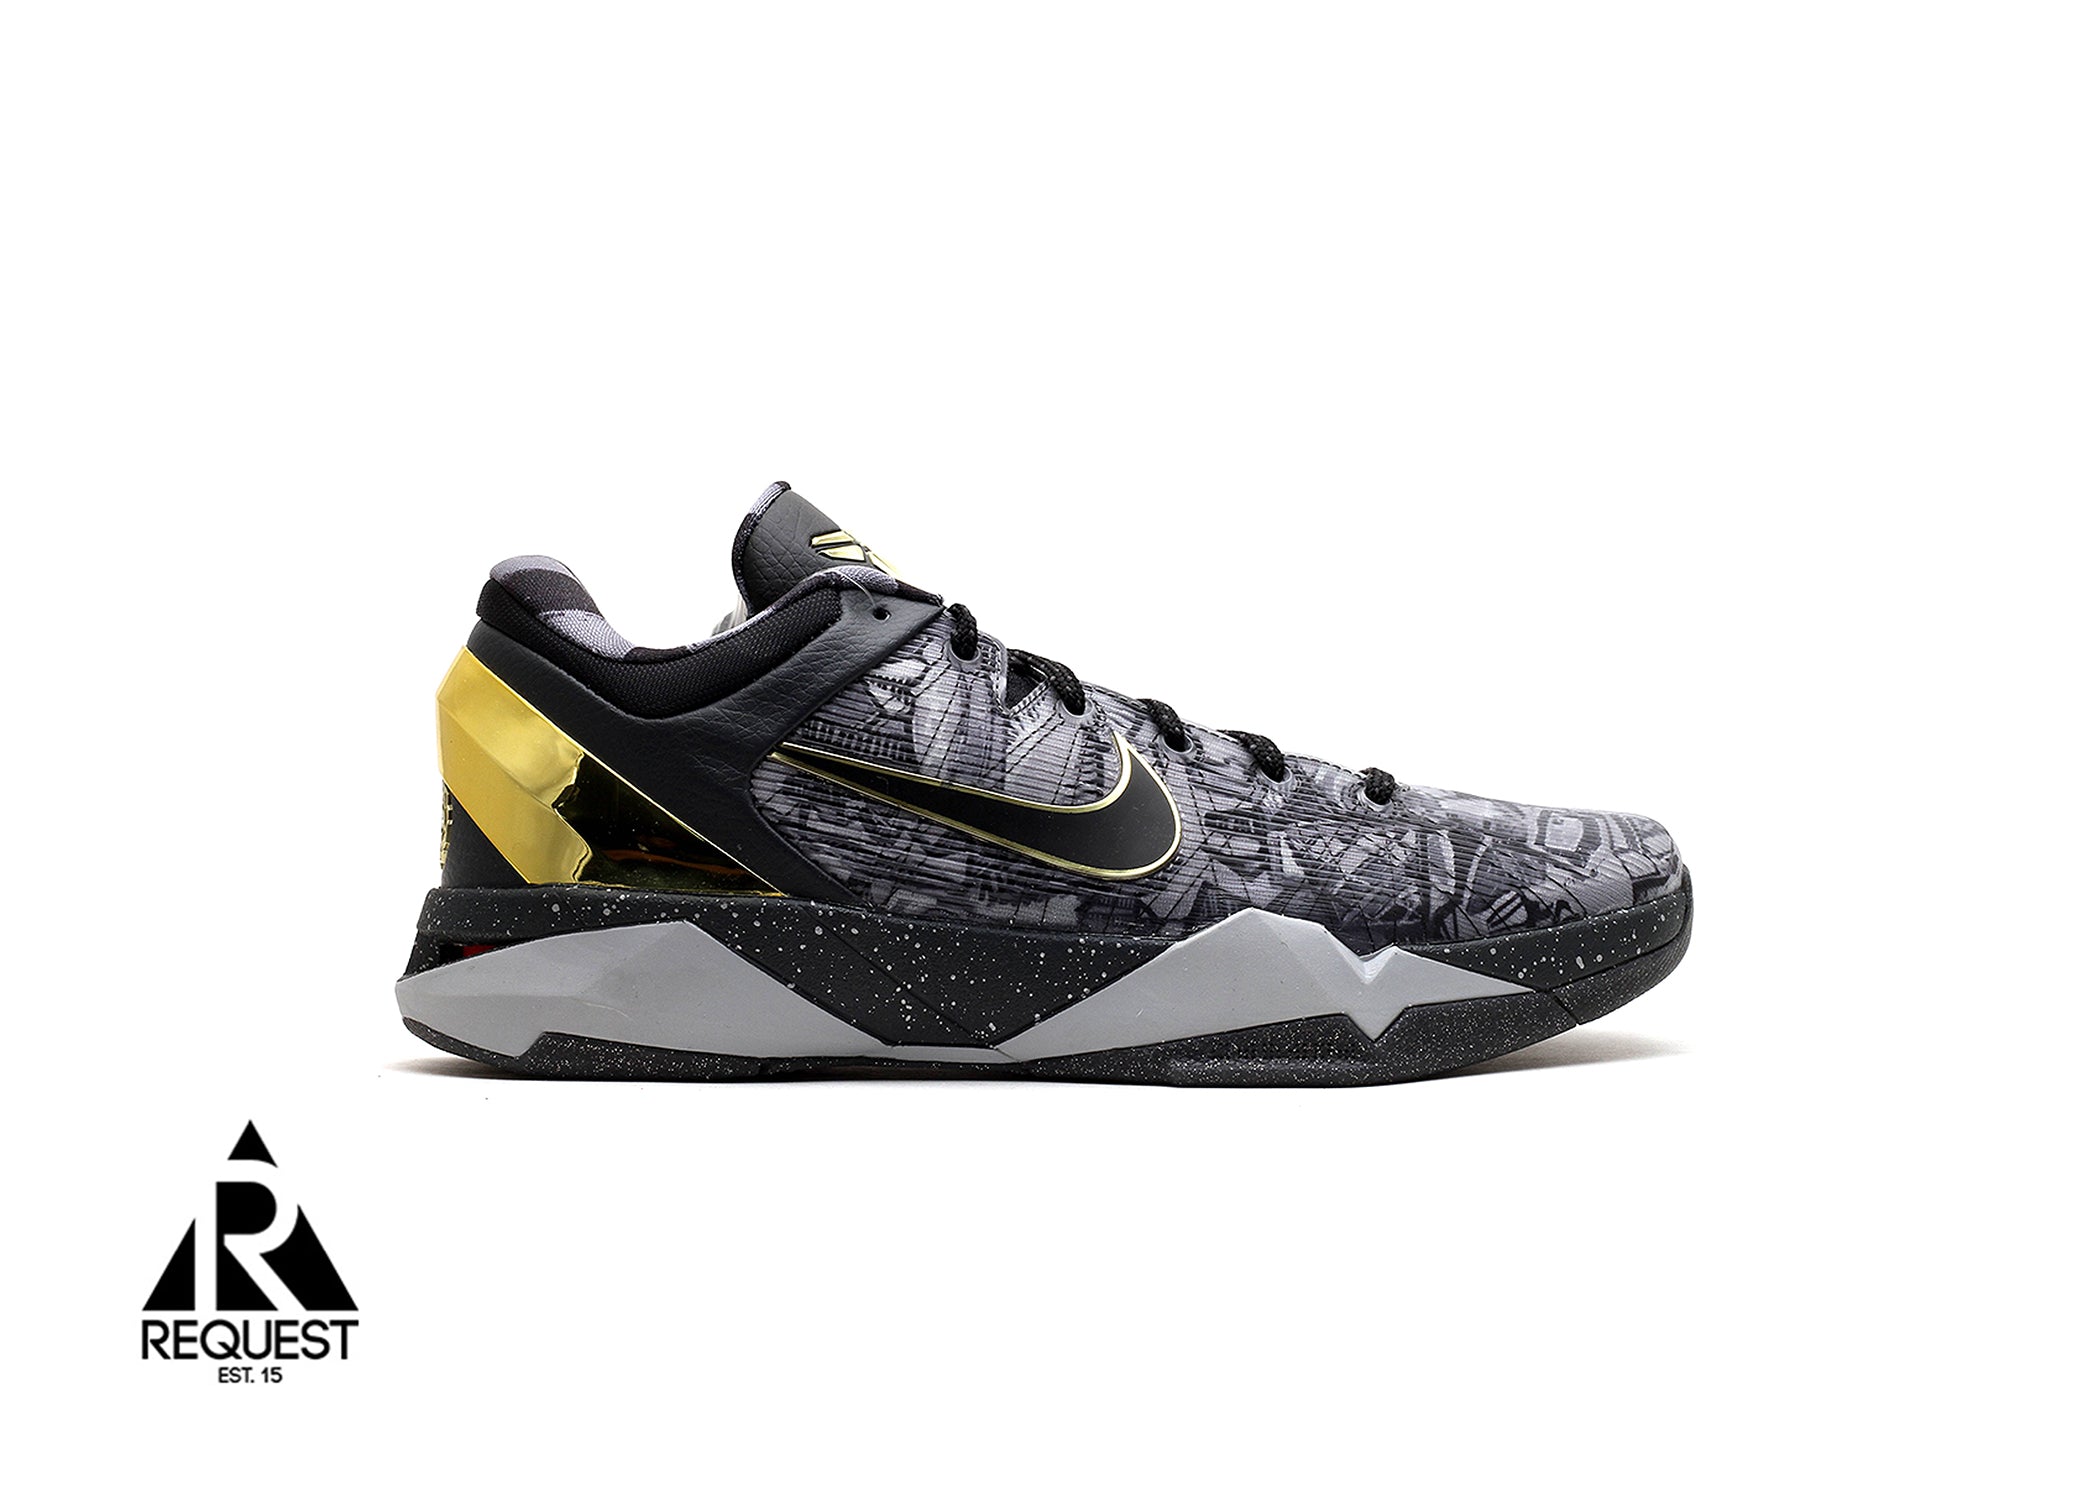 Nike Kobe VII “Prelude”